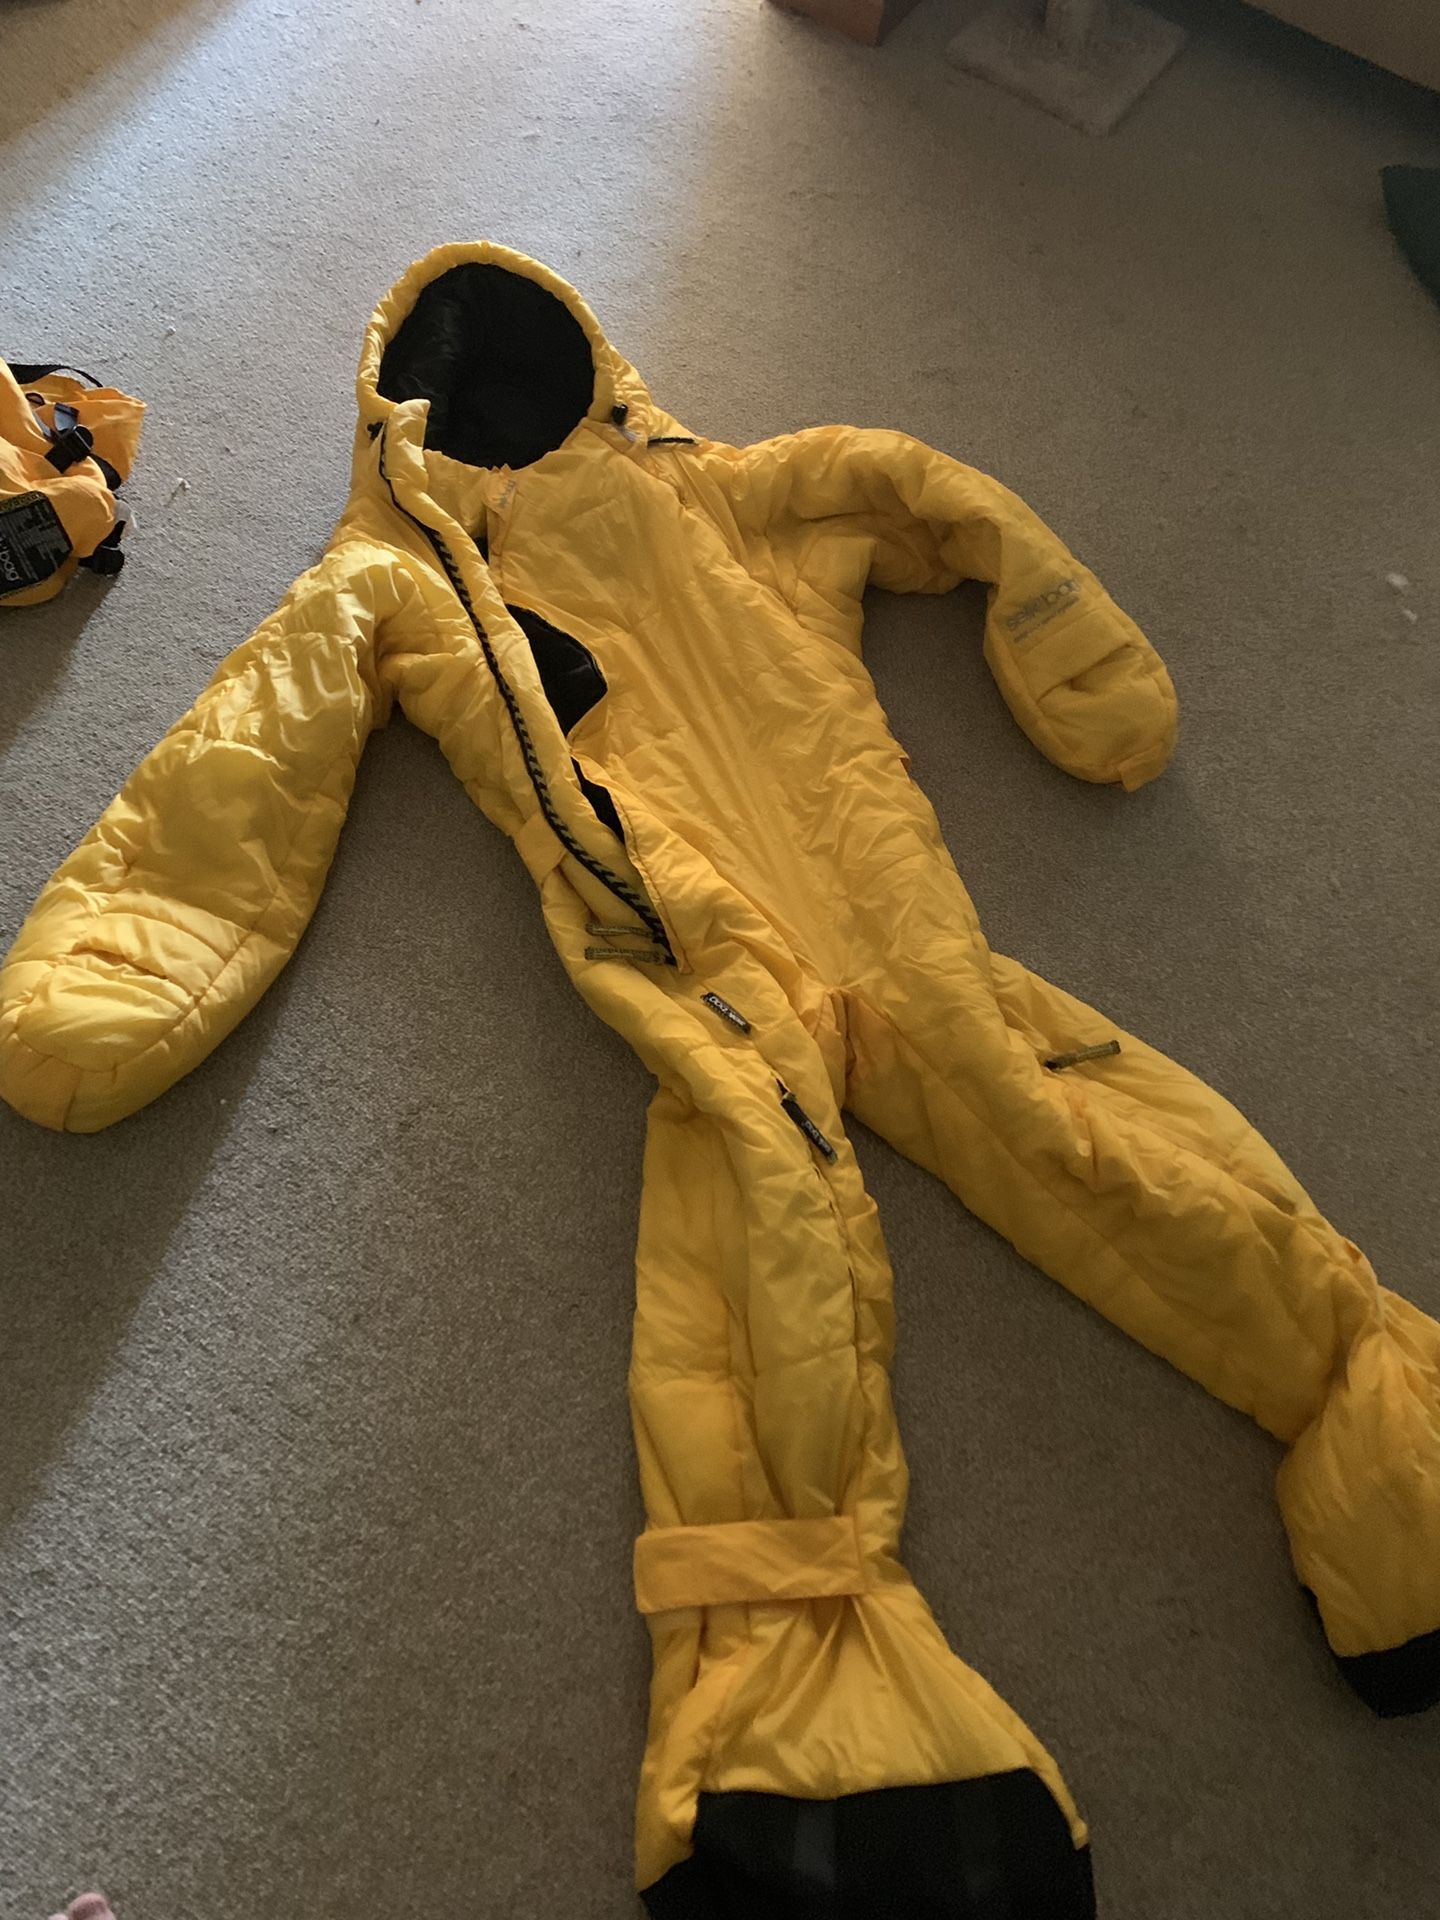 Sleeping bag body suit